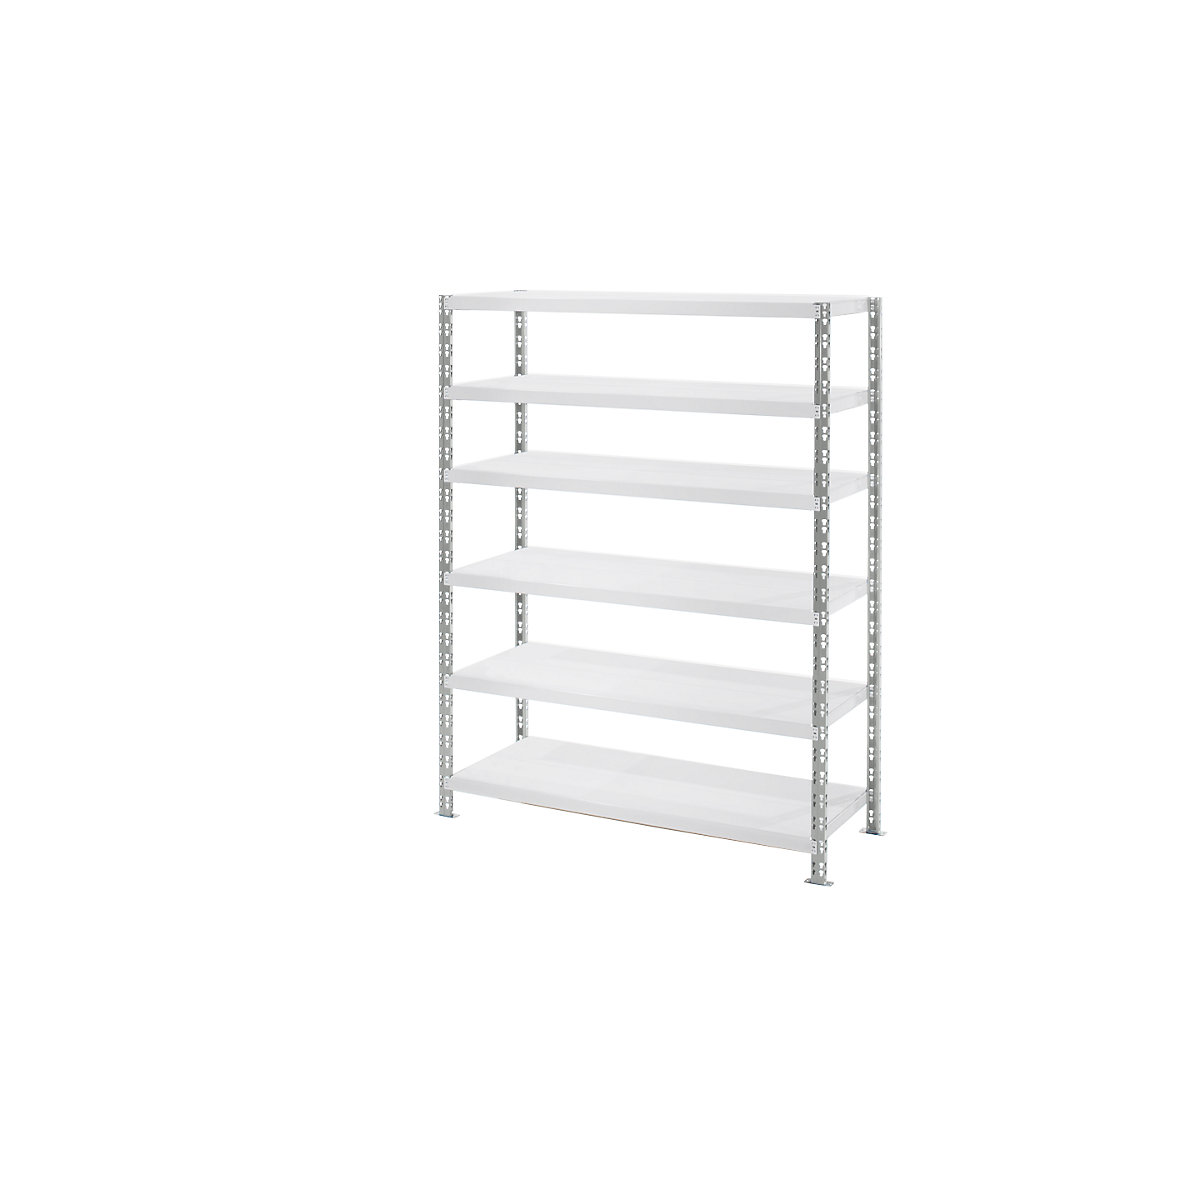 Wide span shelf unit with sheet steel shelves, depth 700 mm, standard shelf unit, HxW 1976 x 1550 mm